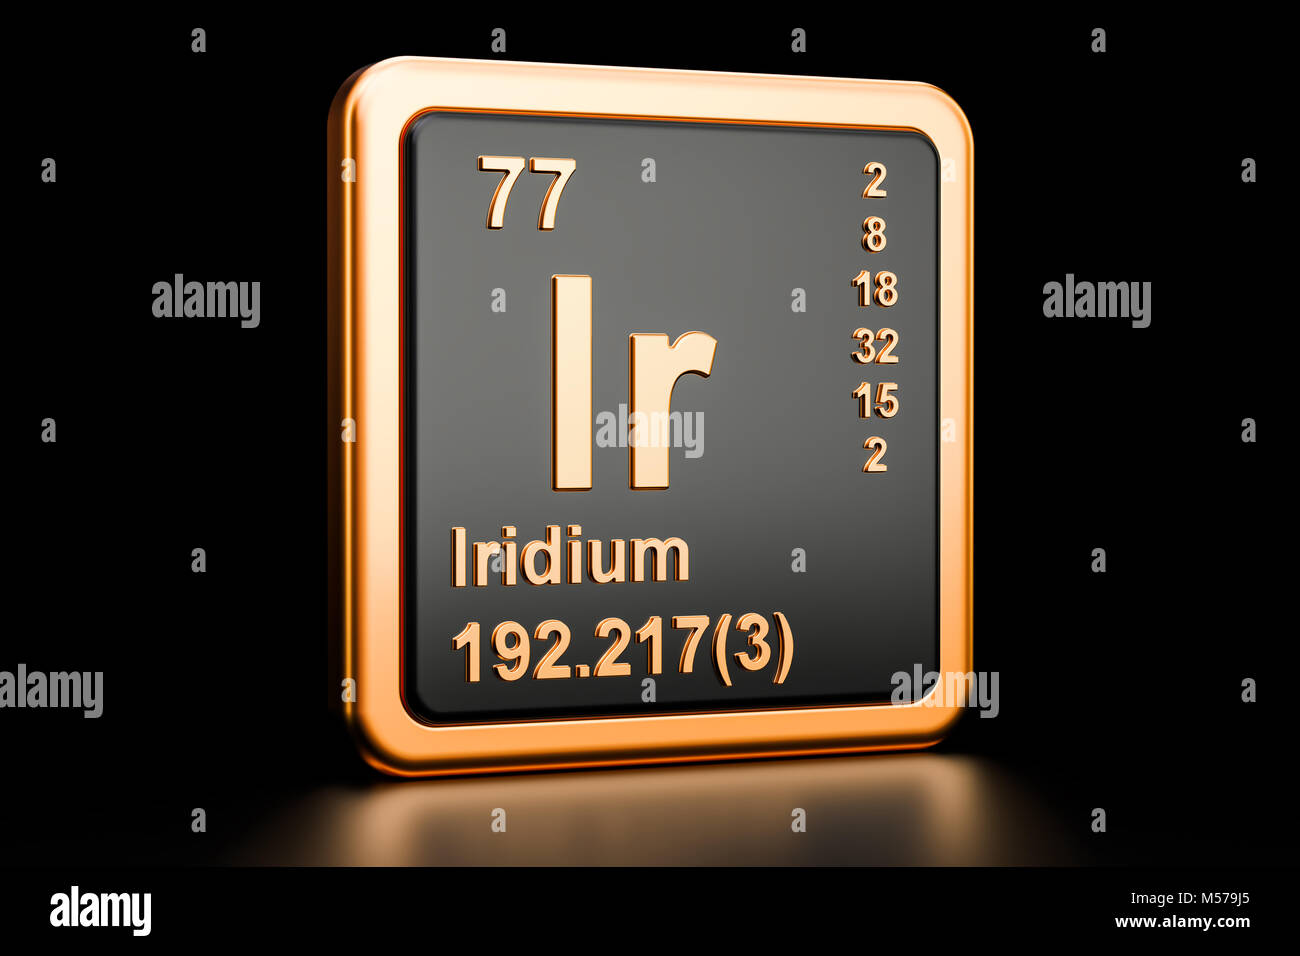 Iridium Ir, chemical element. 3D rendering isolated on black background Stock Photo